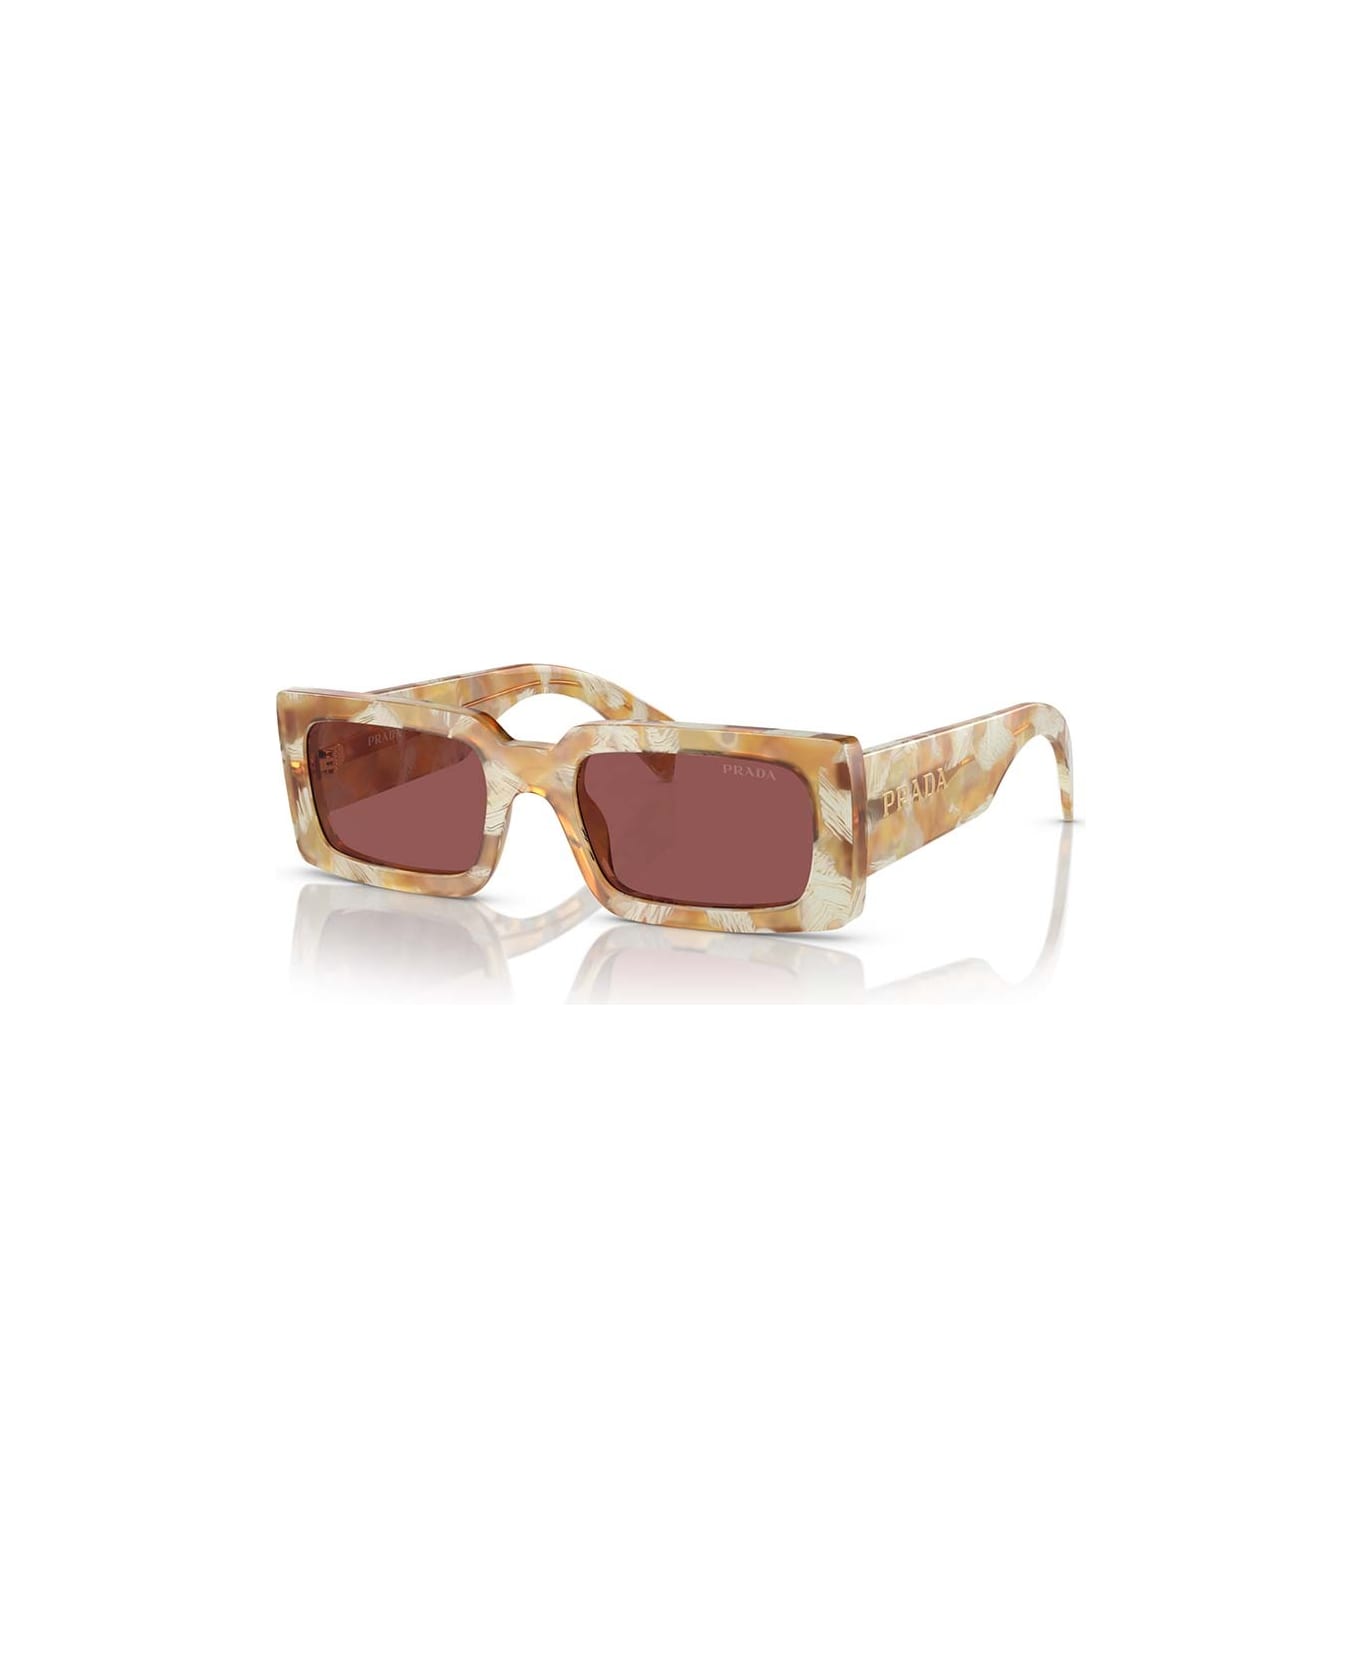 Prada Eyewear Sunglasses - 19N08S